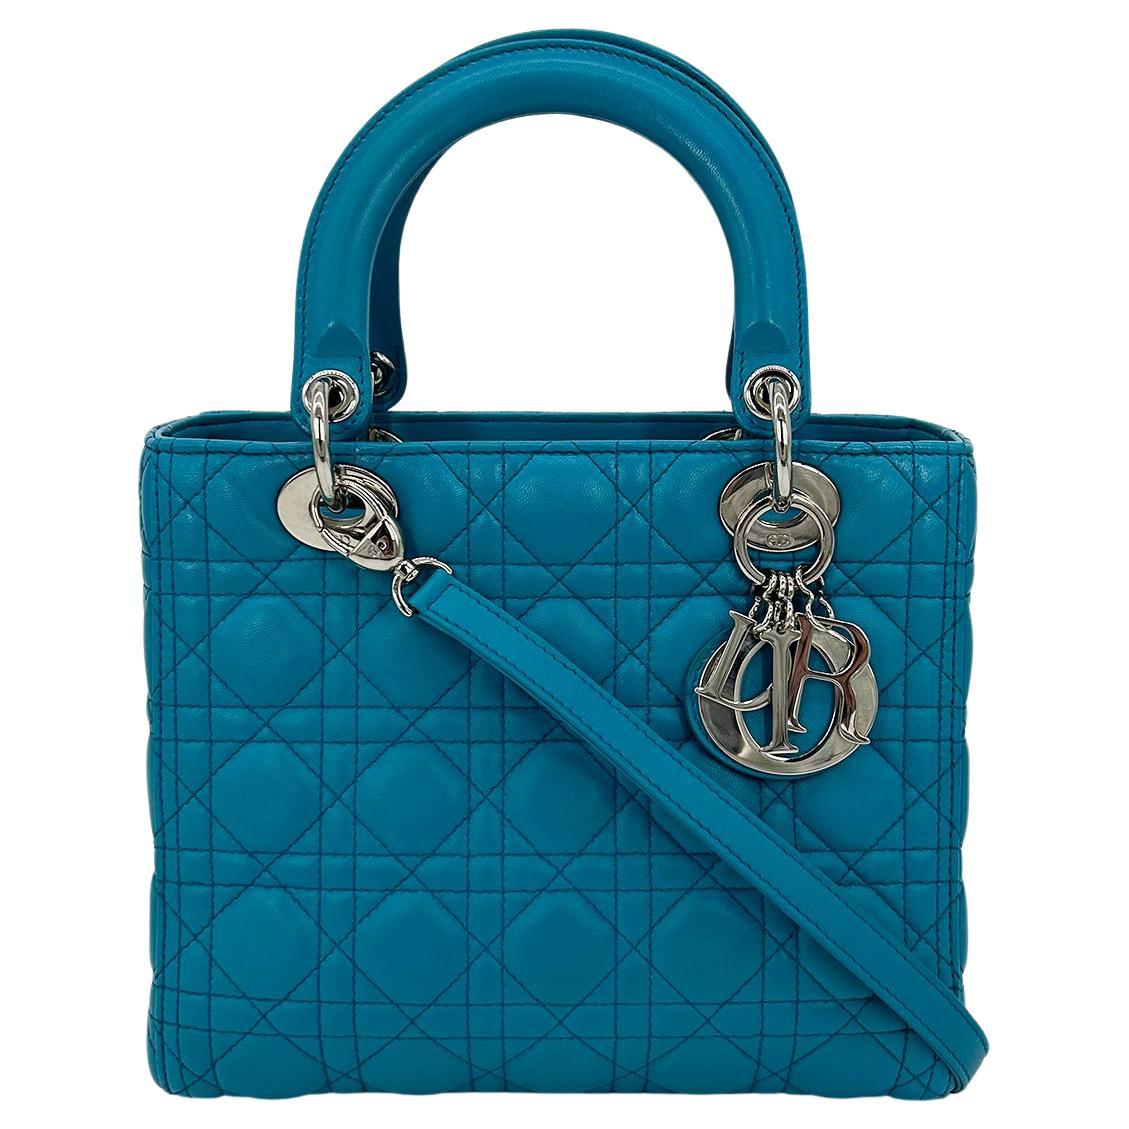 Christian Dior Teal Leather Cannage Medium Lady Di Bag For Sale